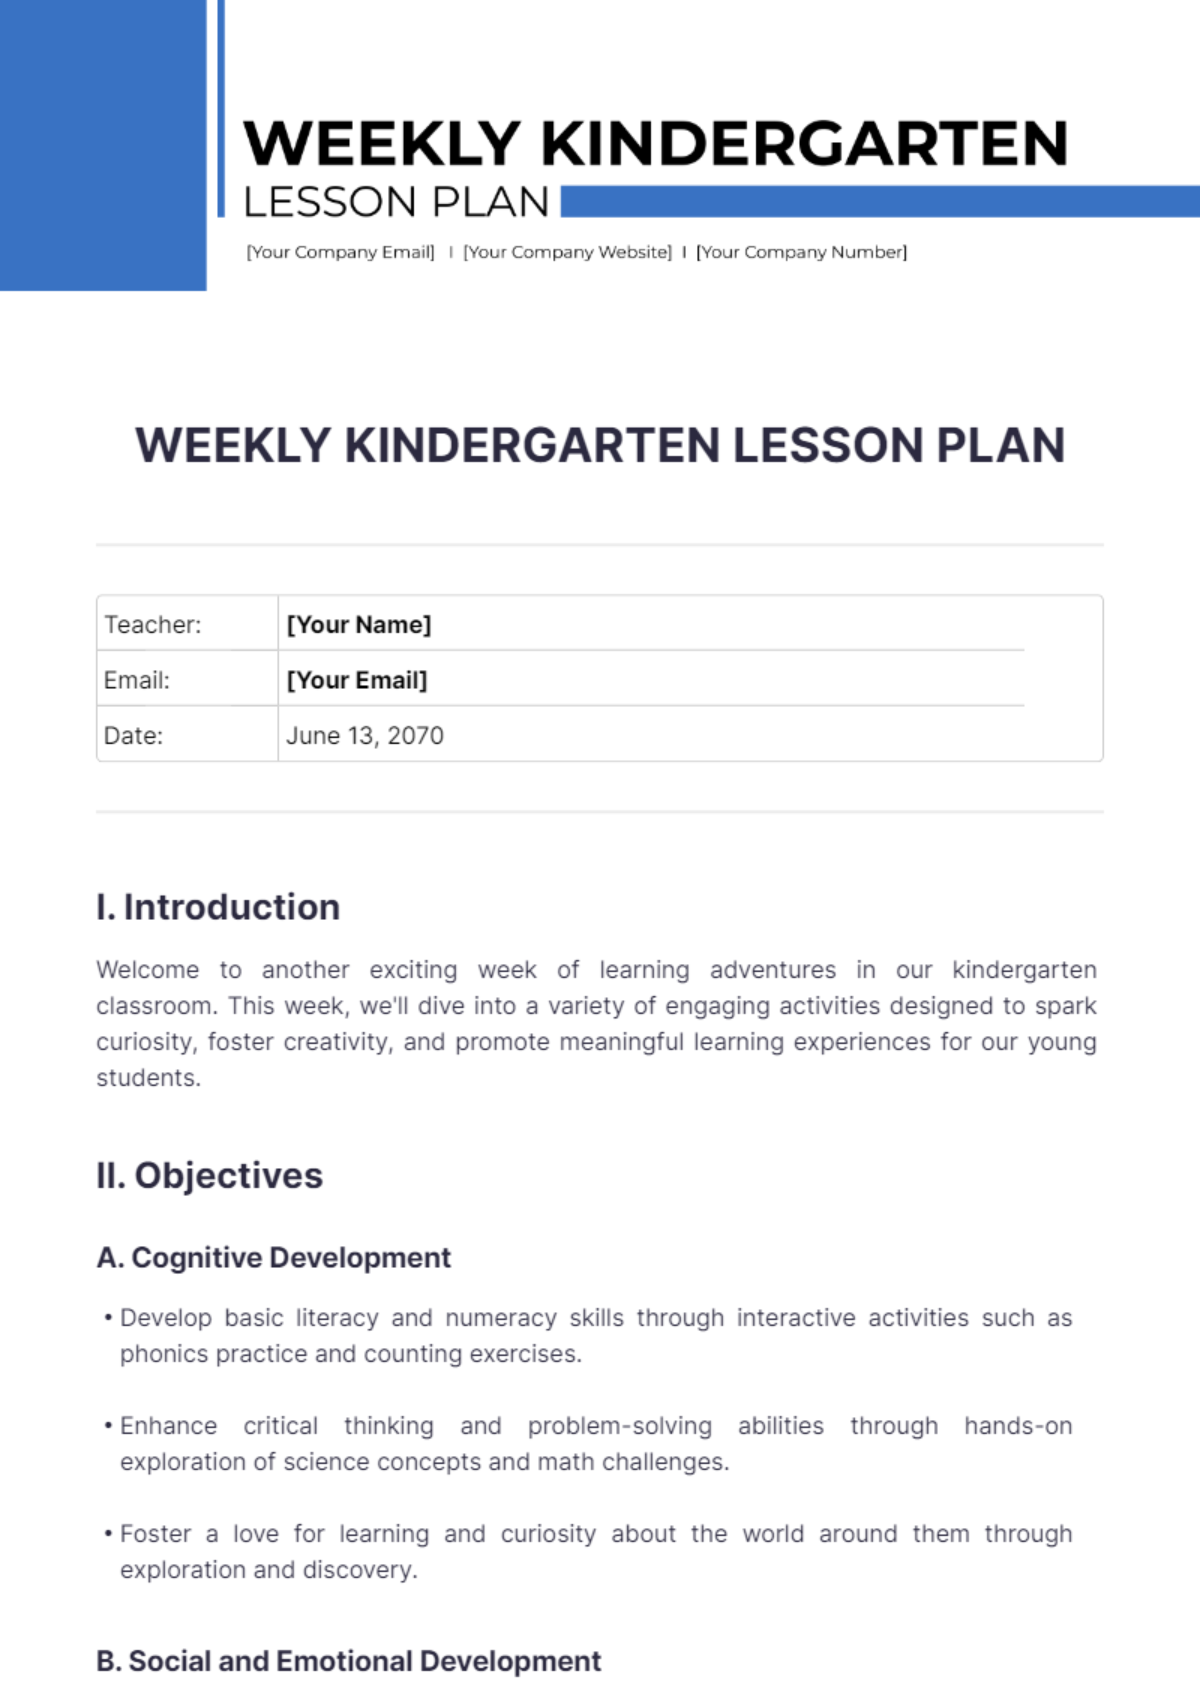 Free Weekly Kindergarten Lesson Plan Template